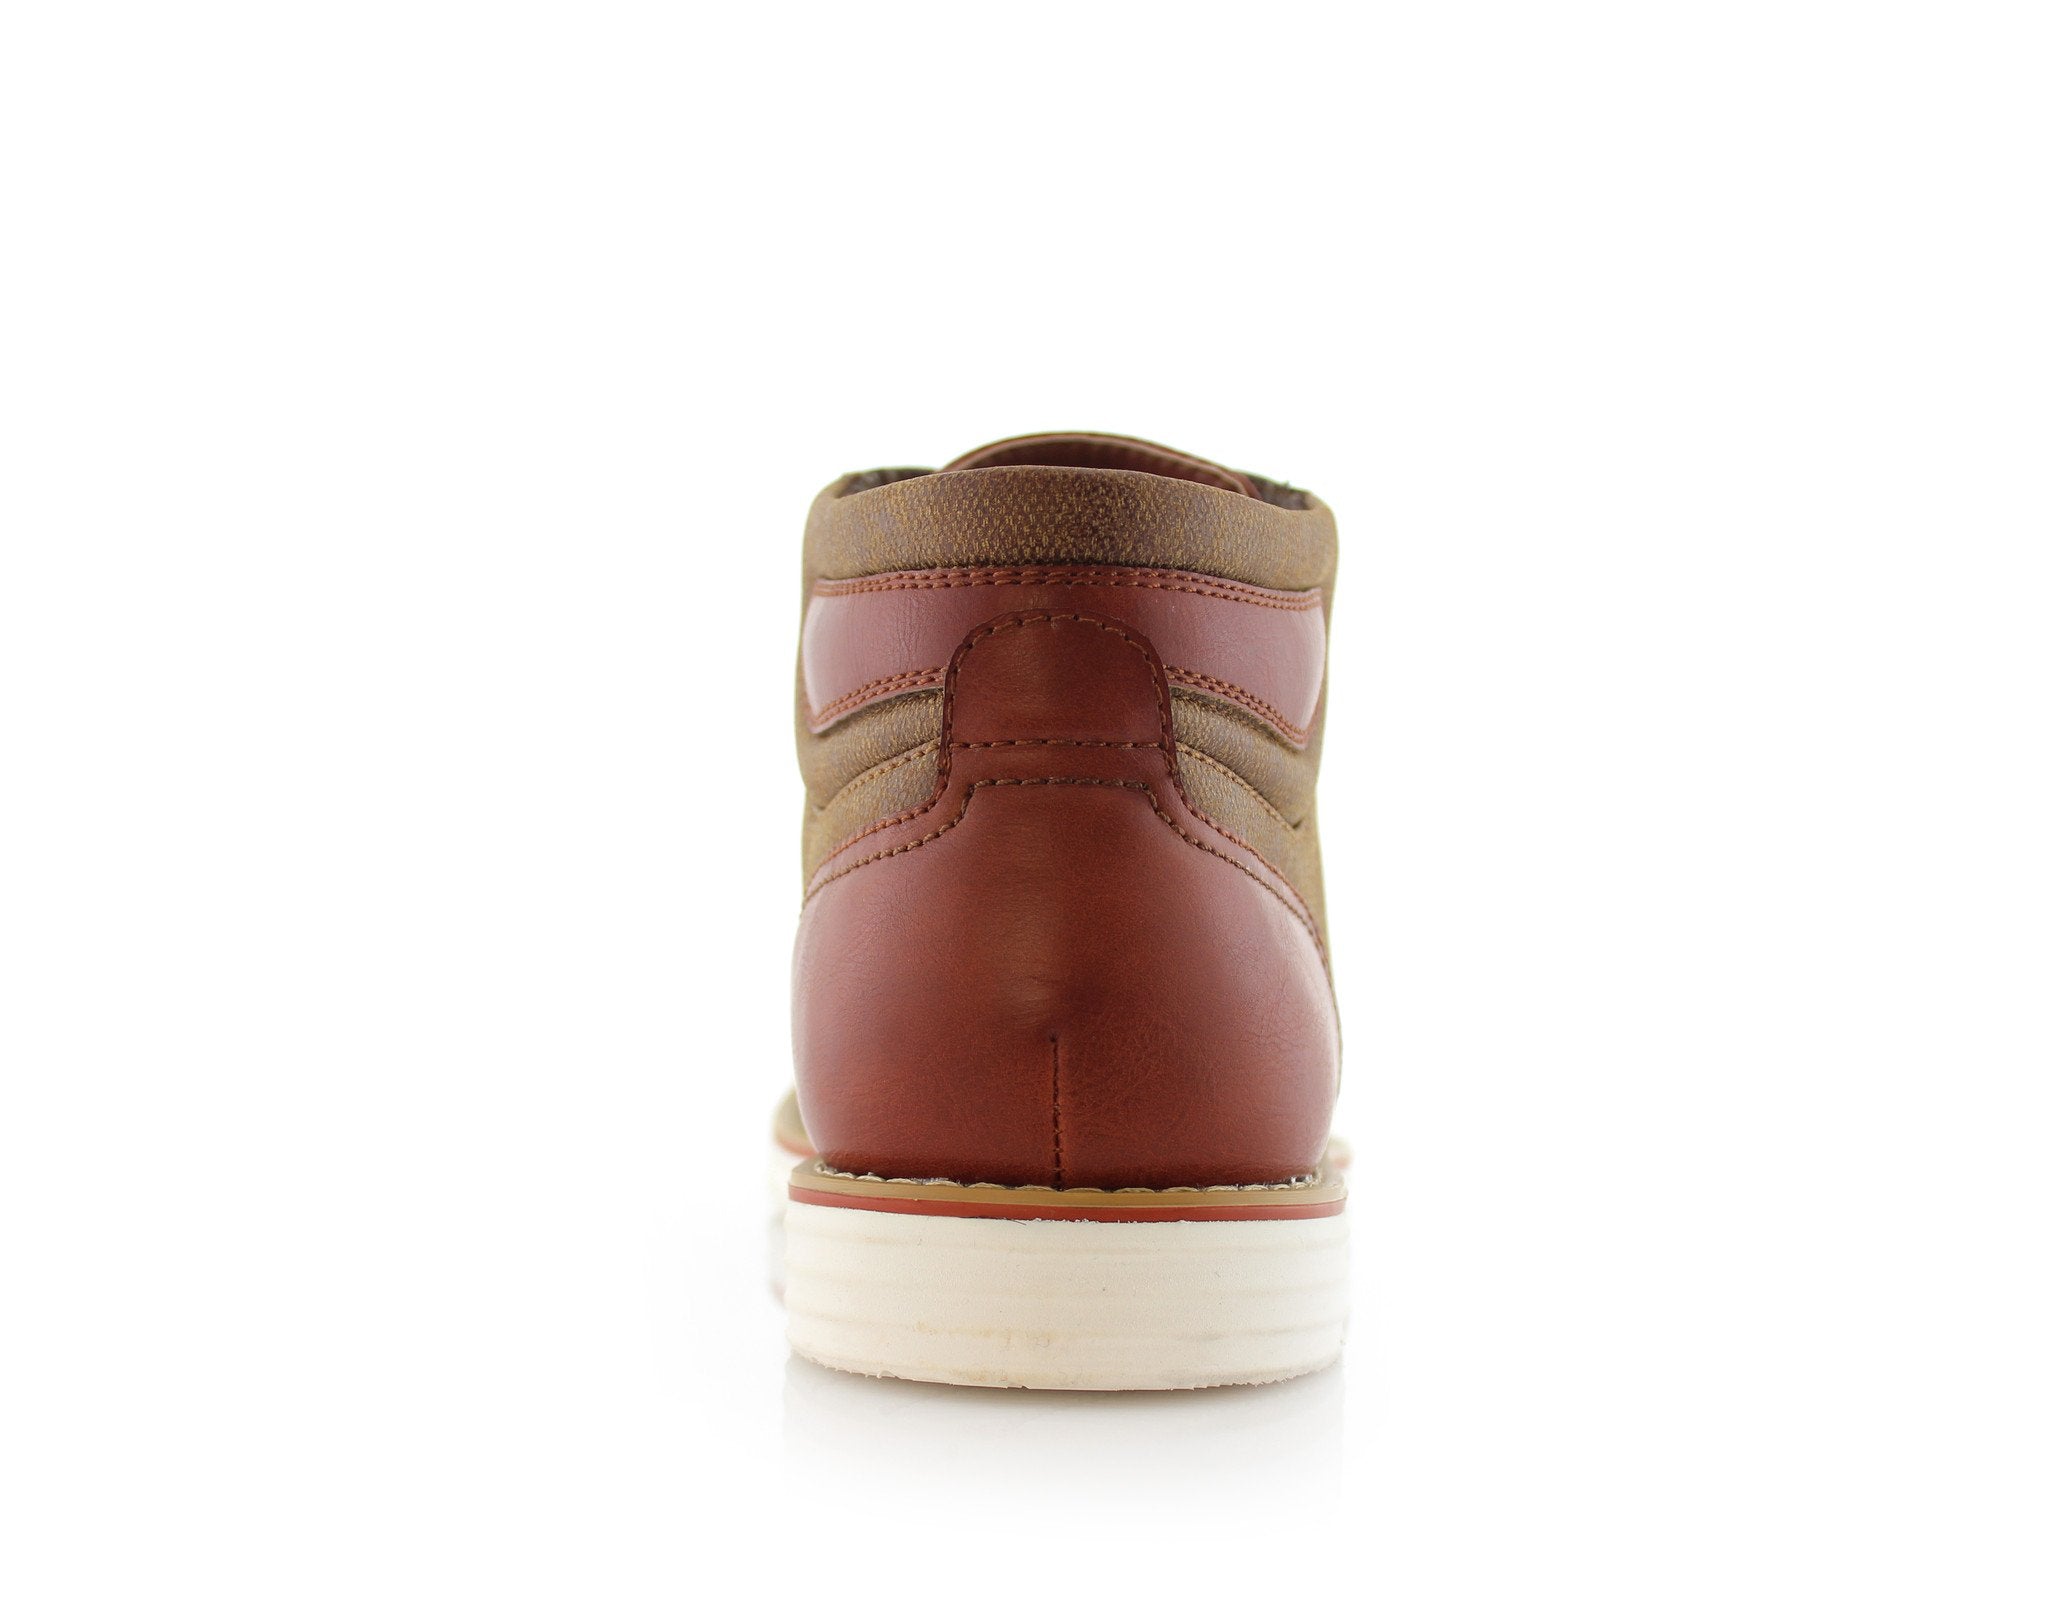 Two-Toned Chukka Sneaker Boots | Owen by Ferro Aldo | Conal Footwear | Back Angle View